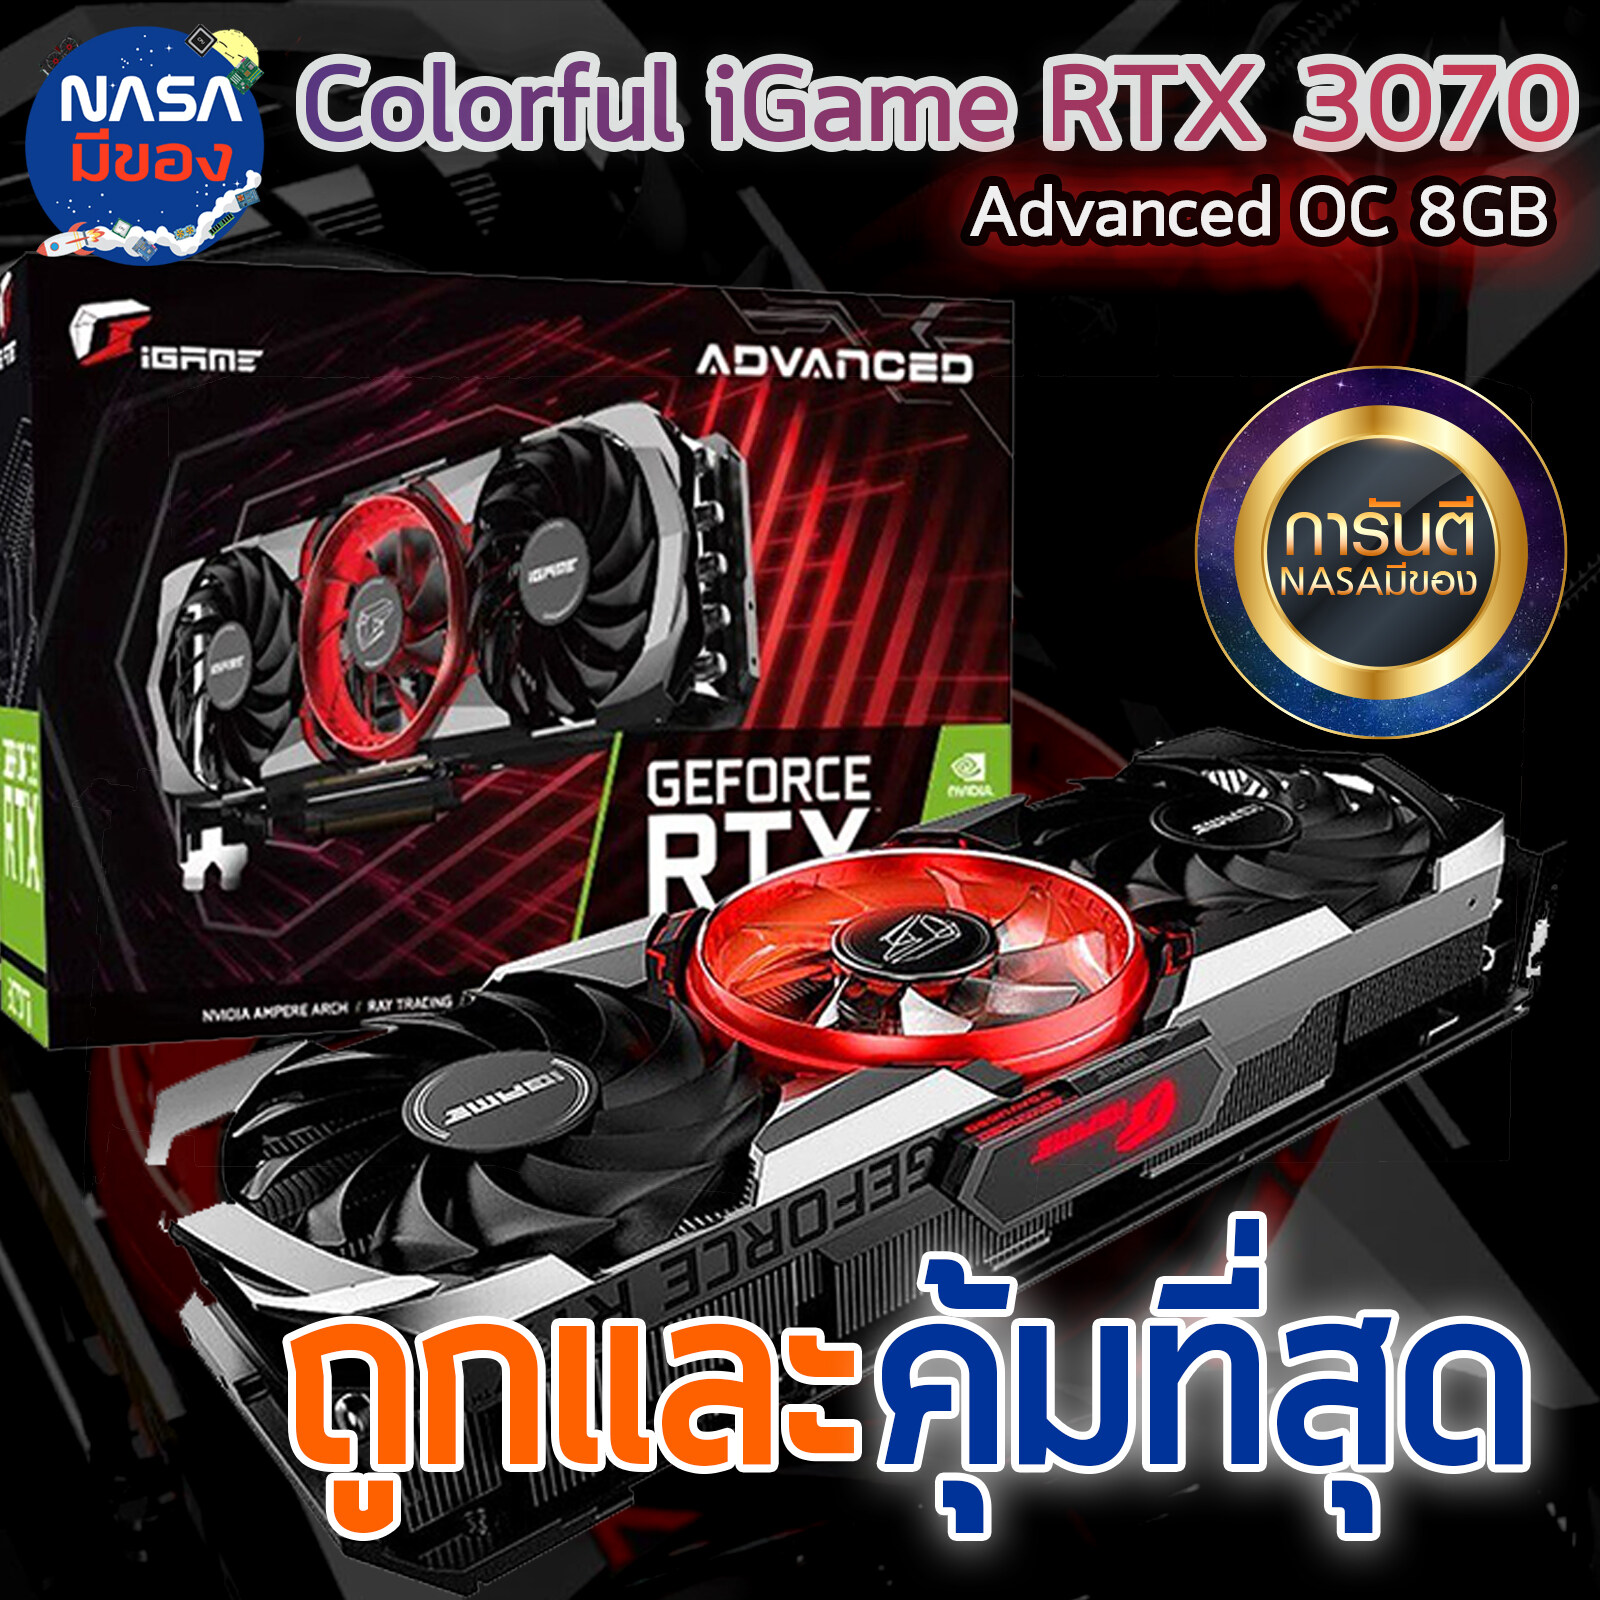 Colorful Igame Geforce Rtx 3070 8g Advanced Oc ถูกและคุ้มที่สุด